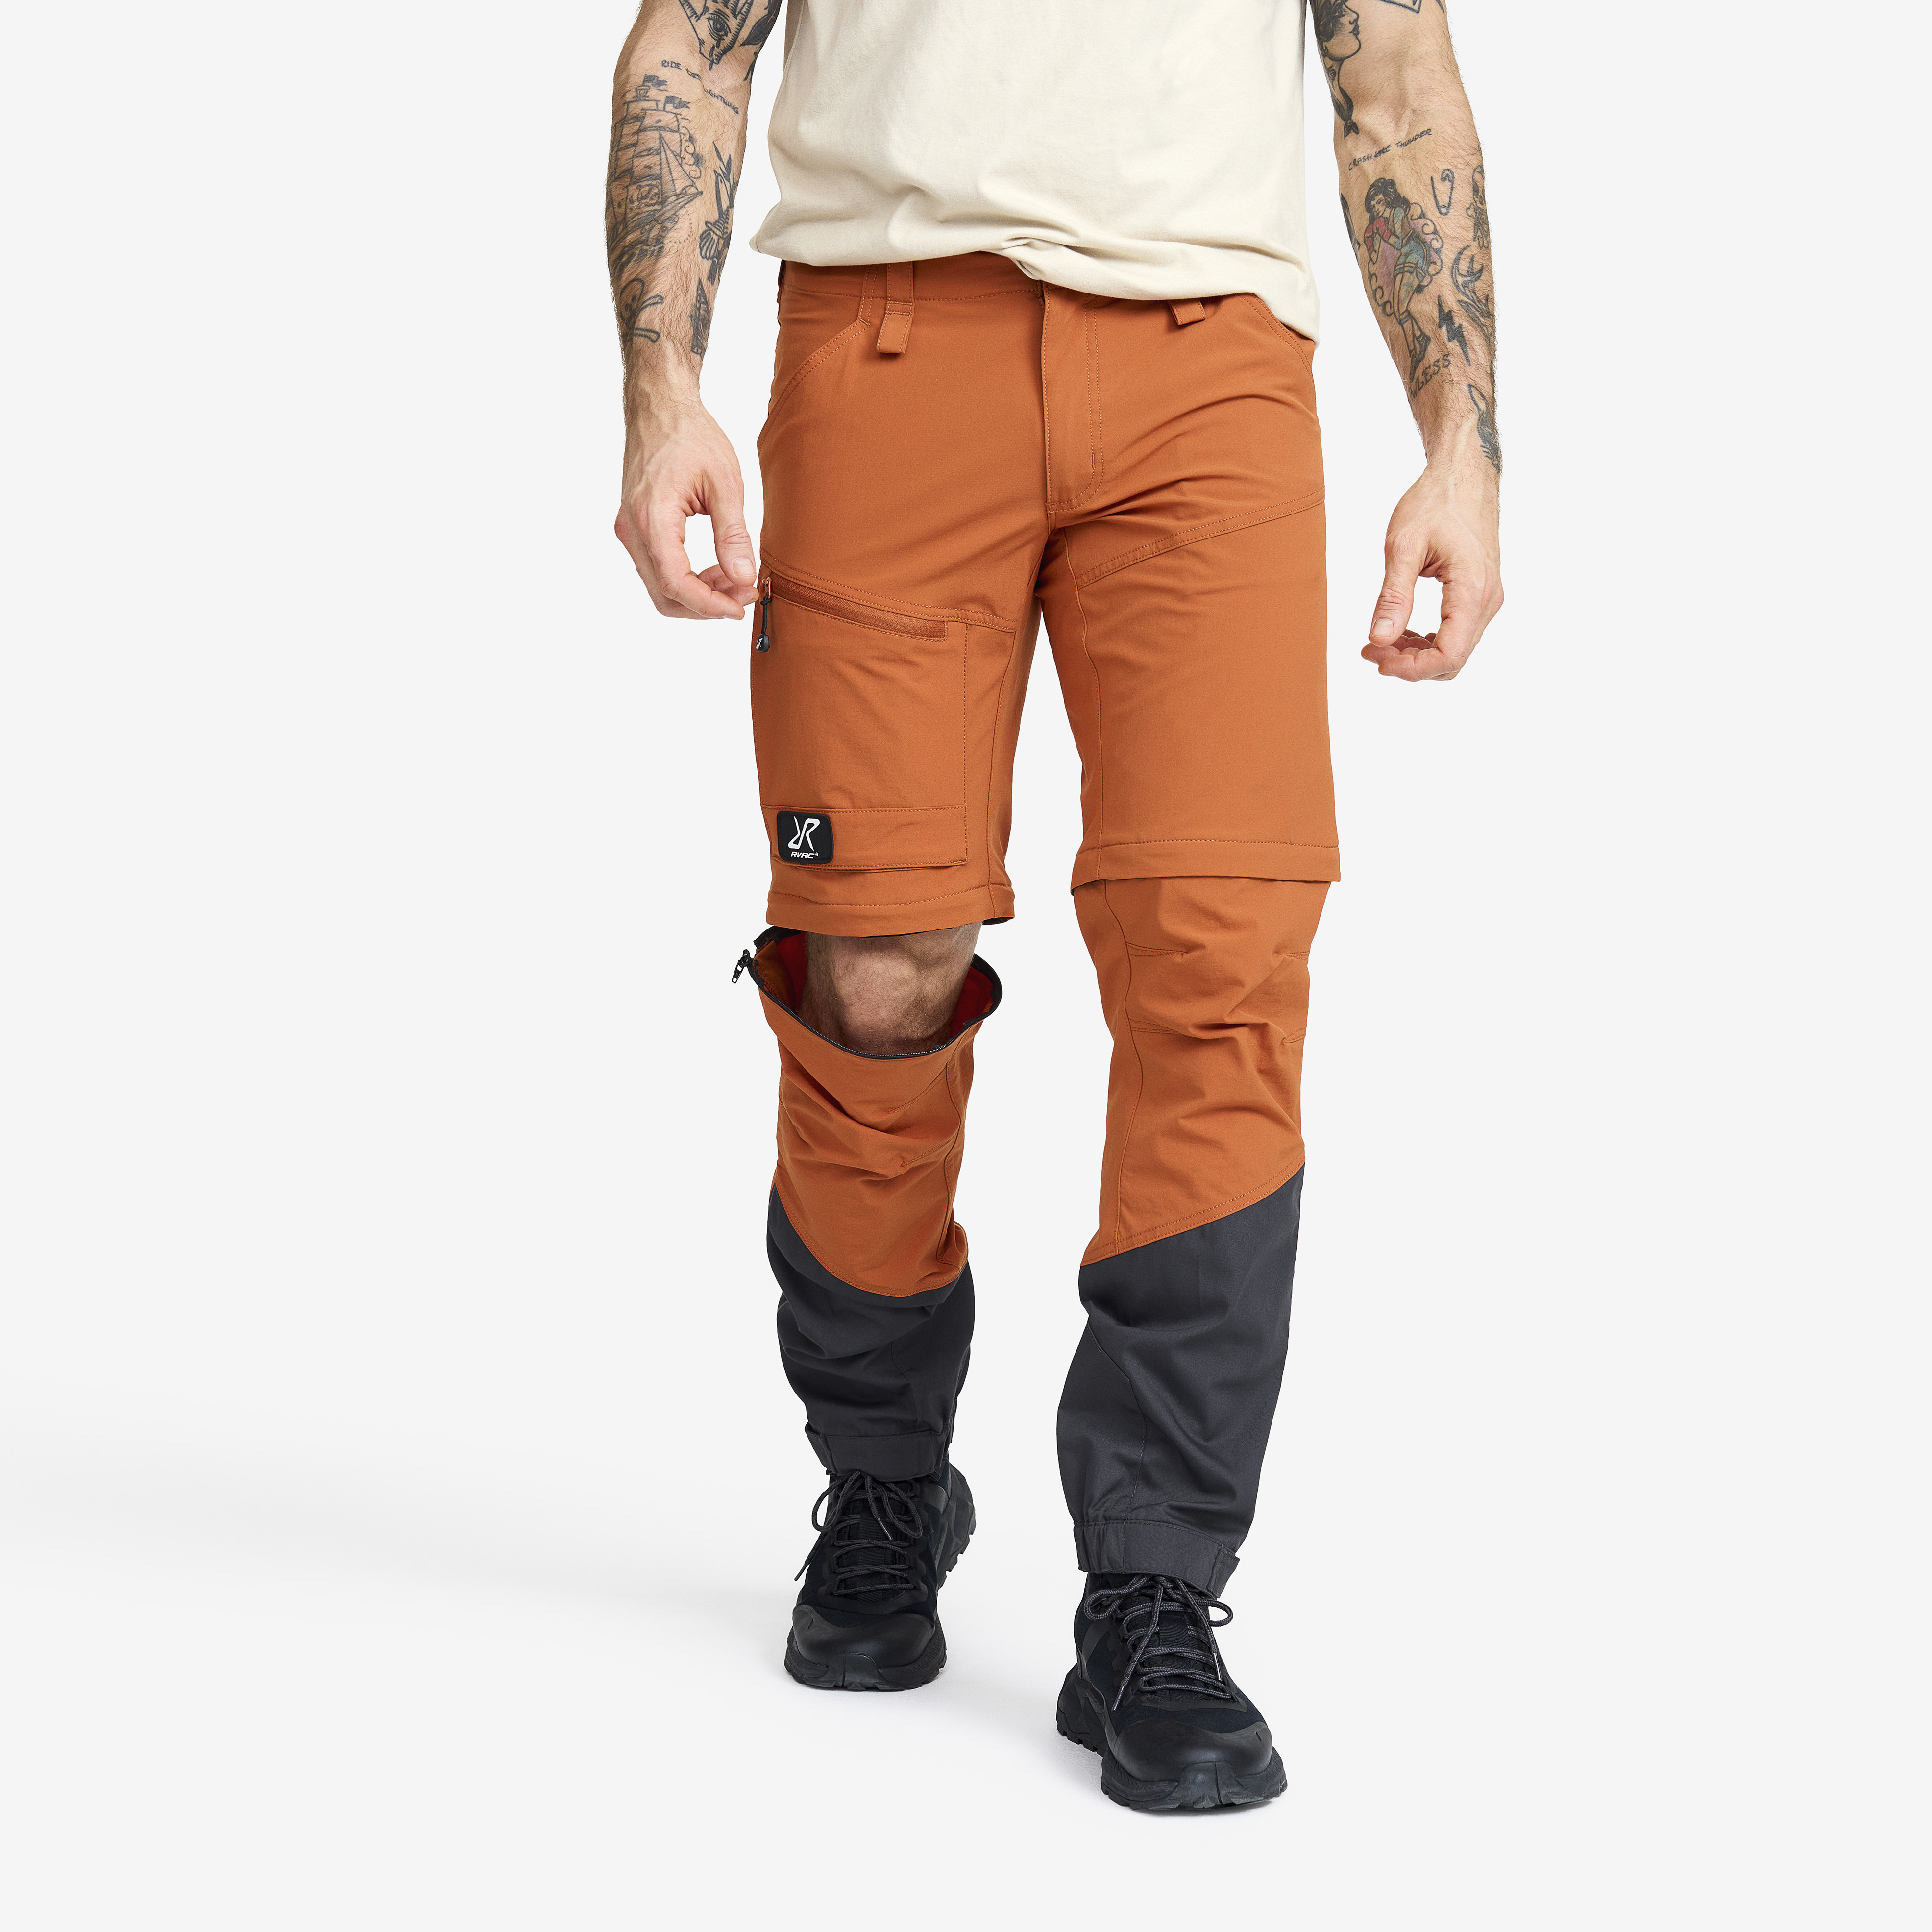 Range Pro Zip-off Pants Teracotta Brown/Anthracite Herre